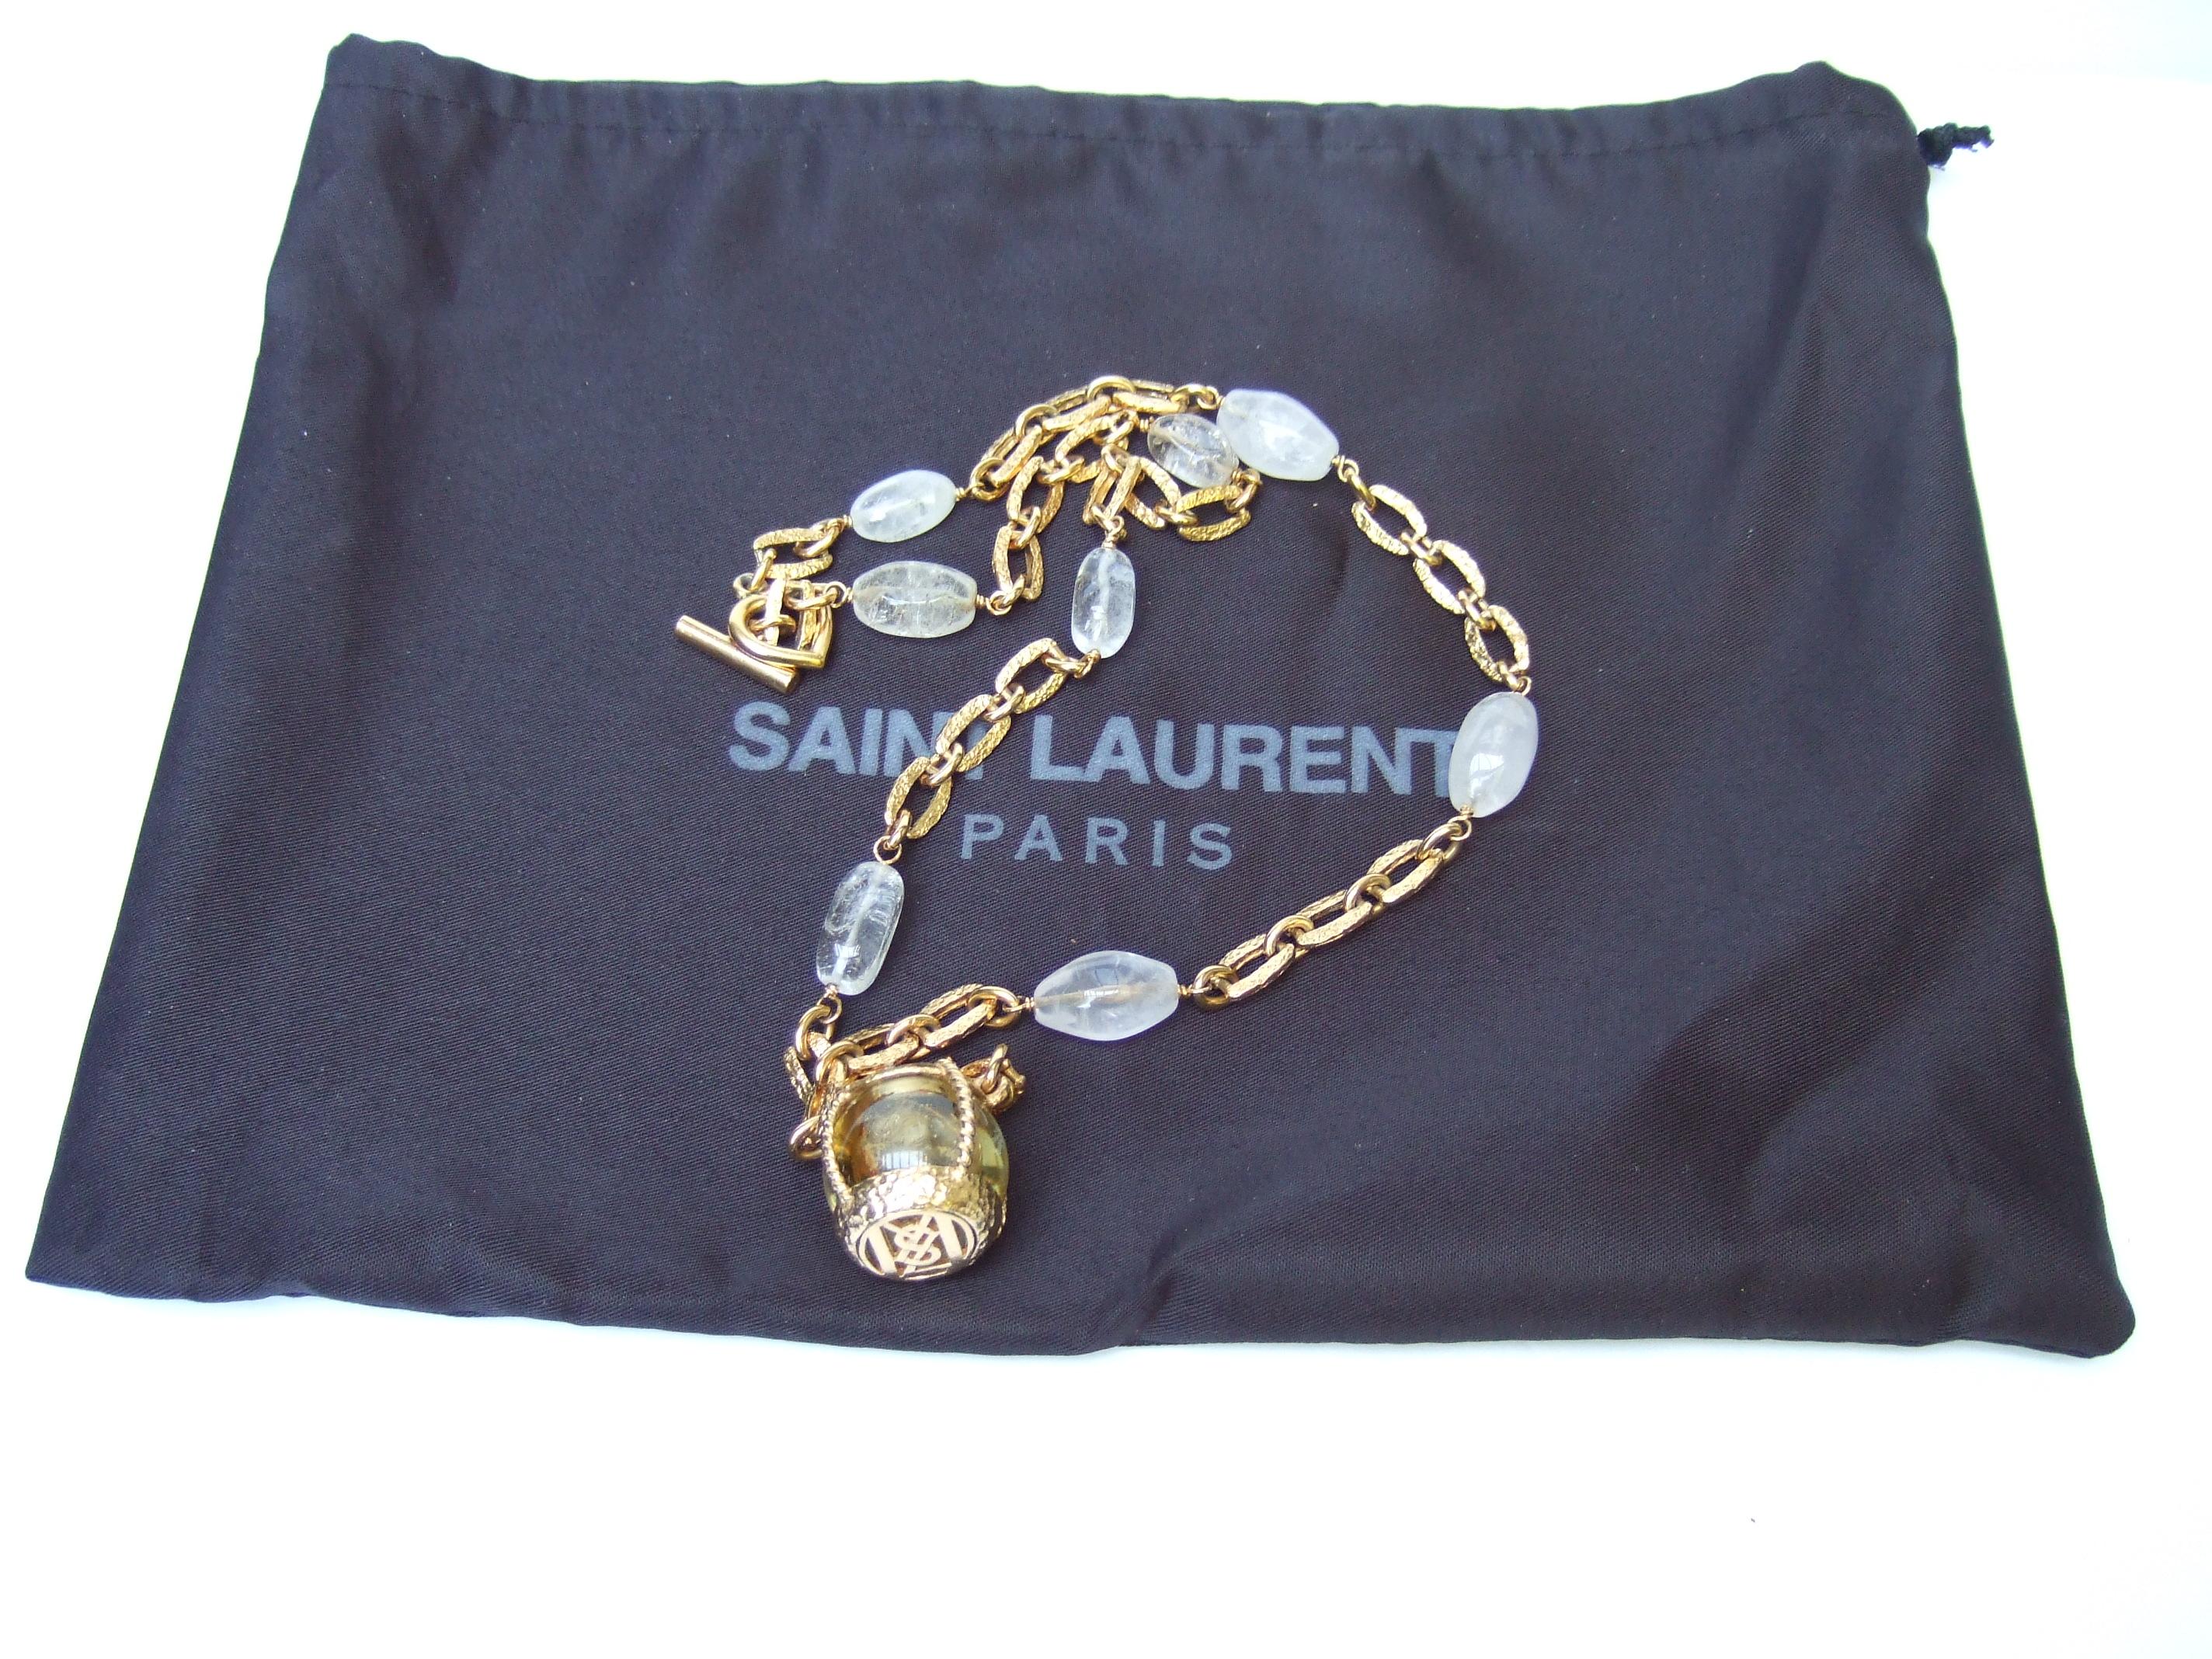 Yves Saint Laurent Rare Crystal Rock Gilt Metal Necklace by Goossens c 1983  For Sale 8